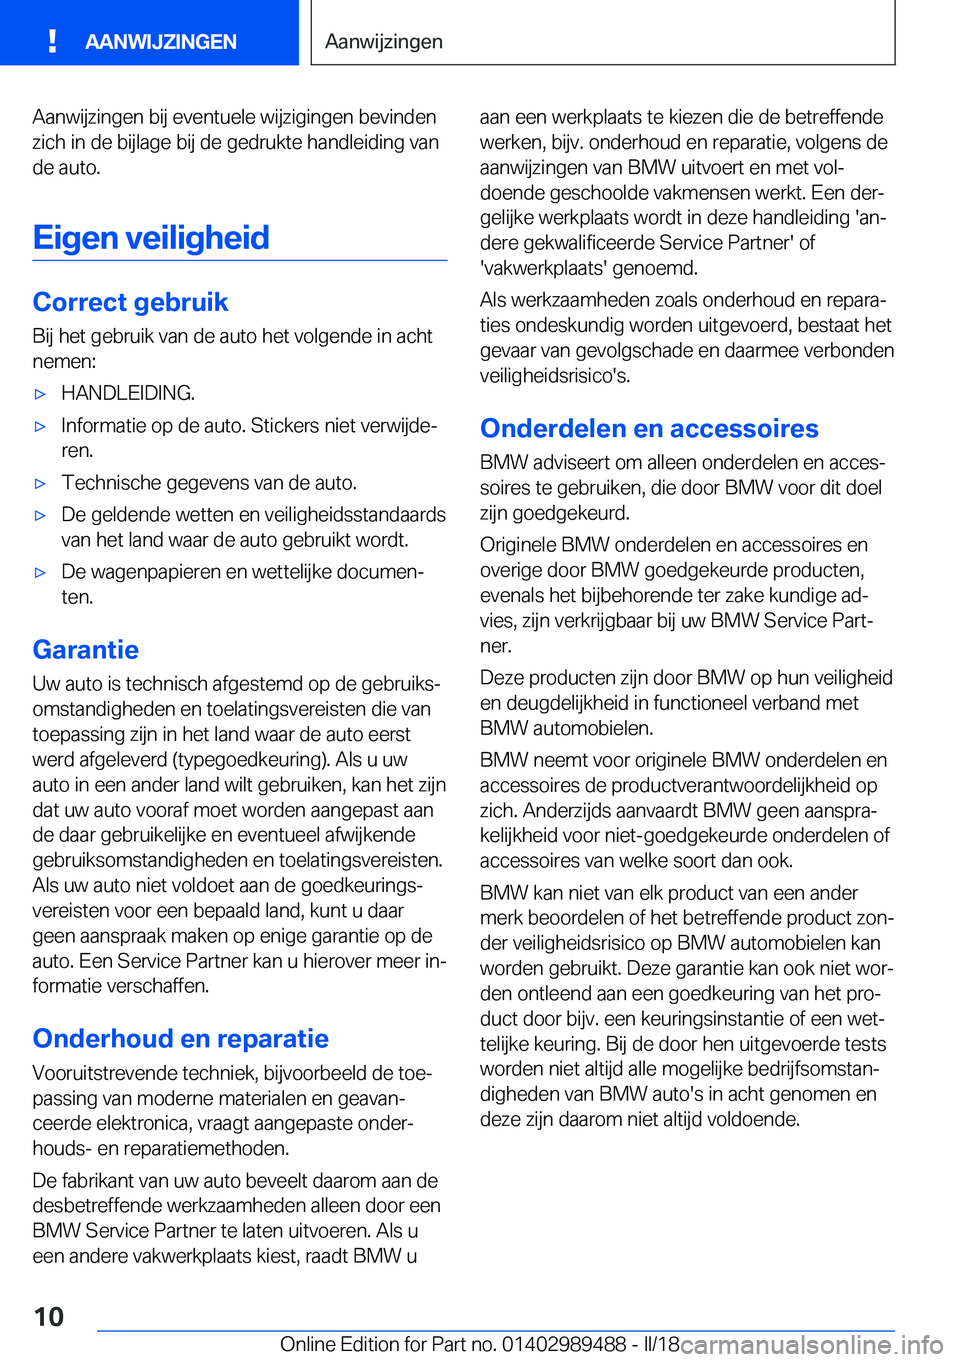 BMW M3 2018  Instructieboekjes (in Dutch) �A�a�n�w�i�j�z�i�n�g�e�n� �b�i�j� �e�v�e�n�t�u�e�l�e� �w�i�j�z�i�g�i�n�g�e�n� �b�e�v�i�n�d�e�n�z�i�c�h� �i�n� �d�e� �b�i�j�l�a�g�e� �b�i�j� �d�e� �g�e�d�r�u�k�t�e� �h�a�n�d�l�e�i�d�i�n�g� �v�a�n
�d�e�